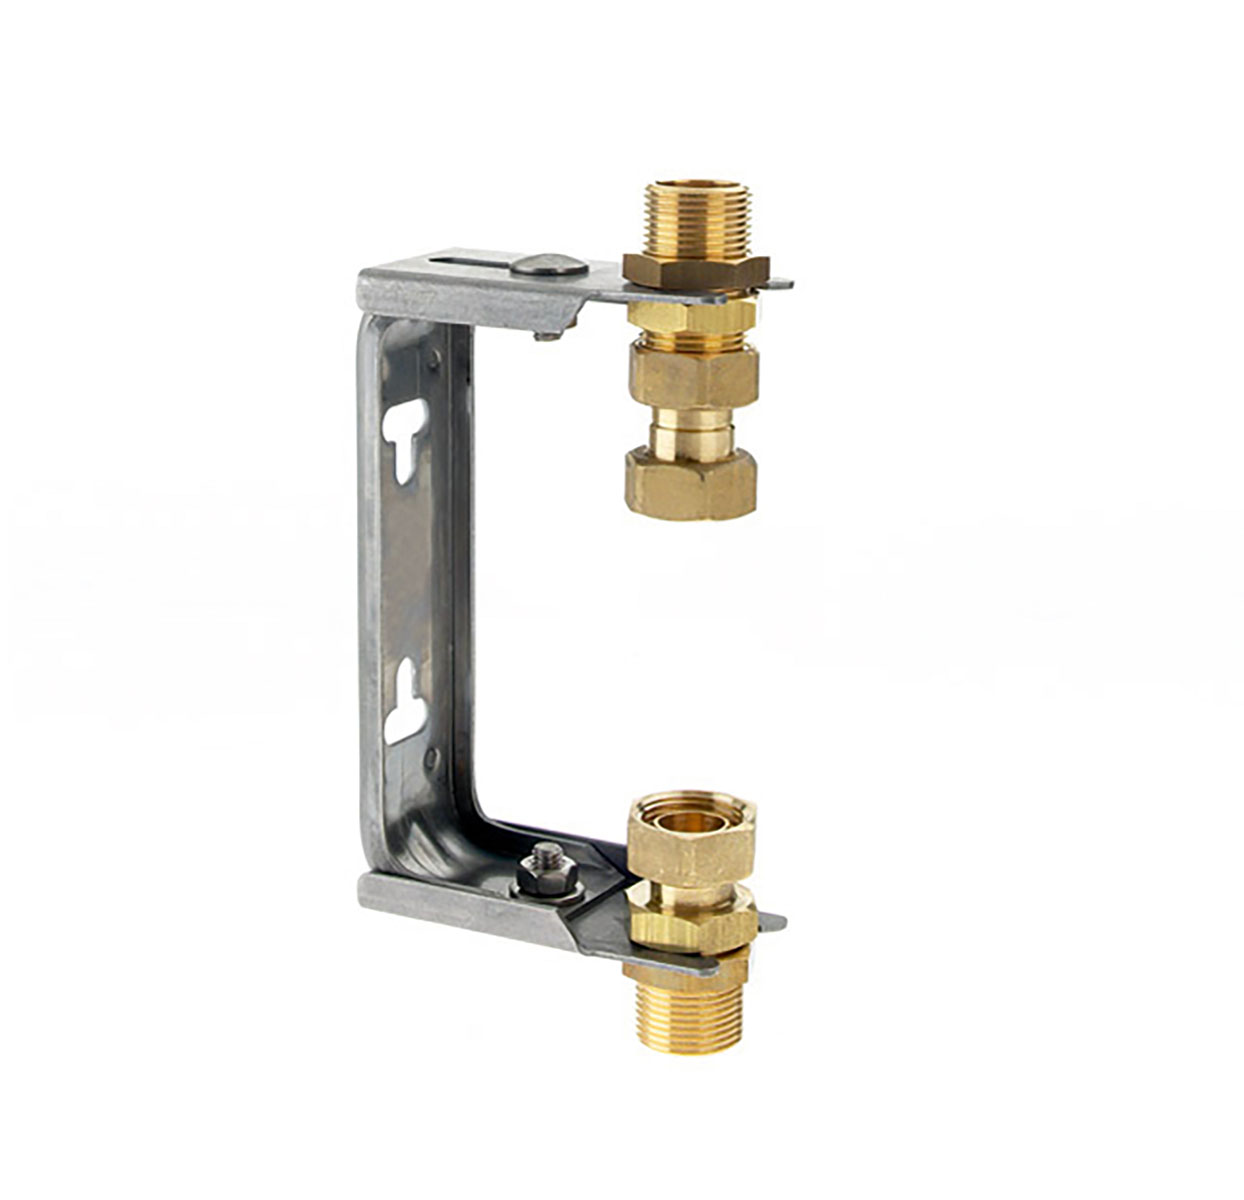 5099500 - Water meter Connection kit bracket adjustable, vertical installation